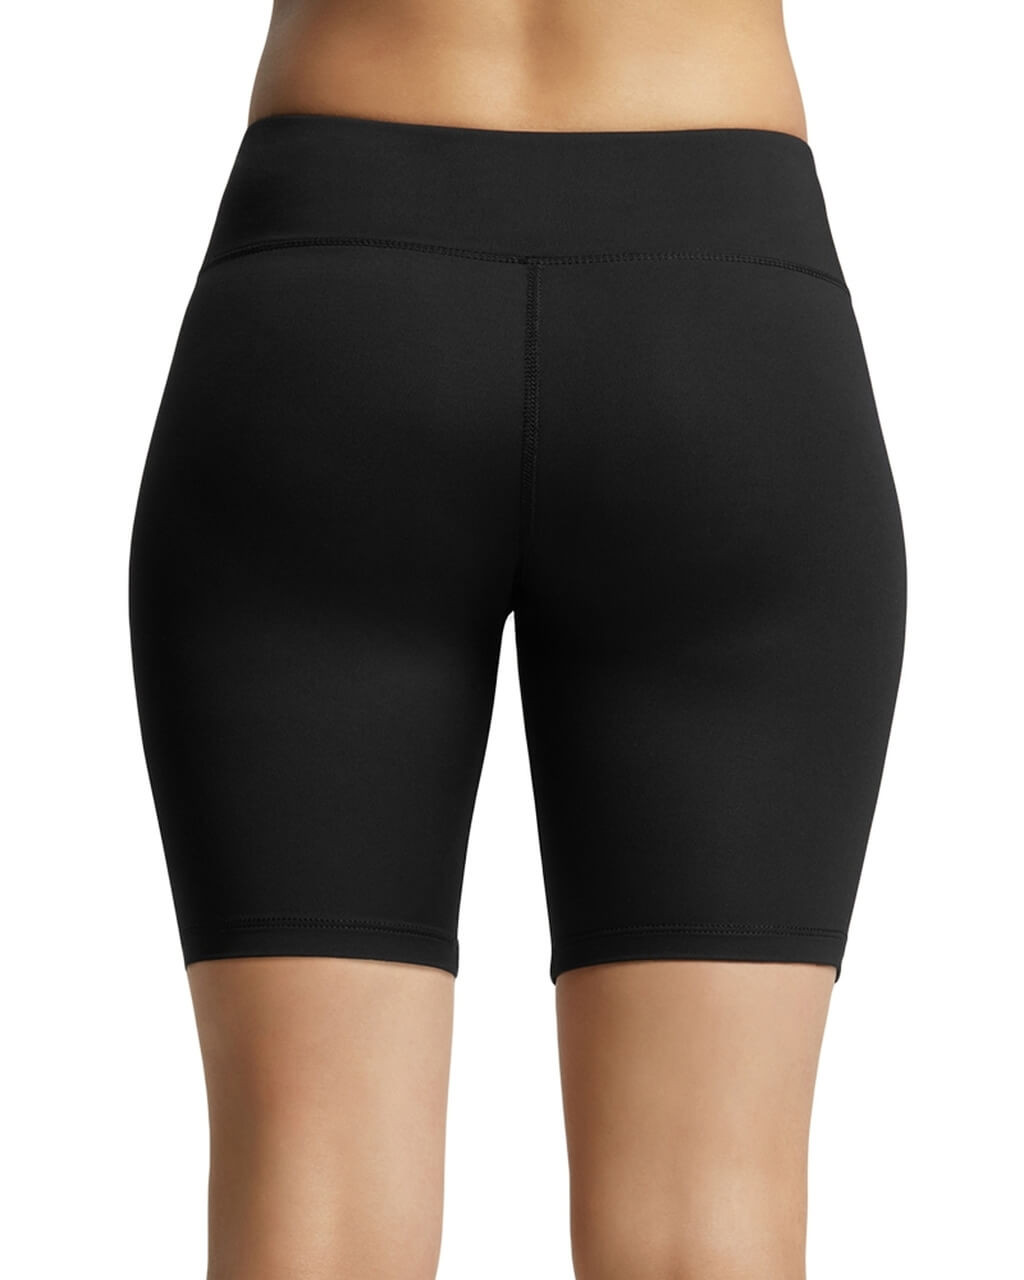 spandex shorts female Hot Sale - OFF 52%